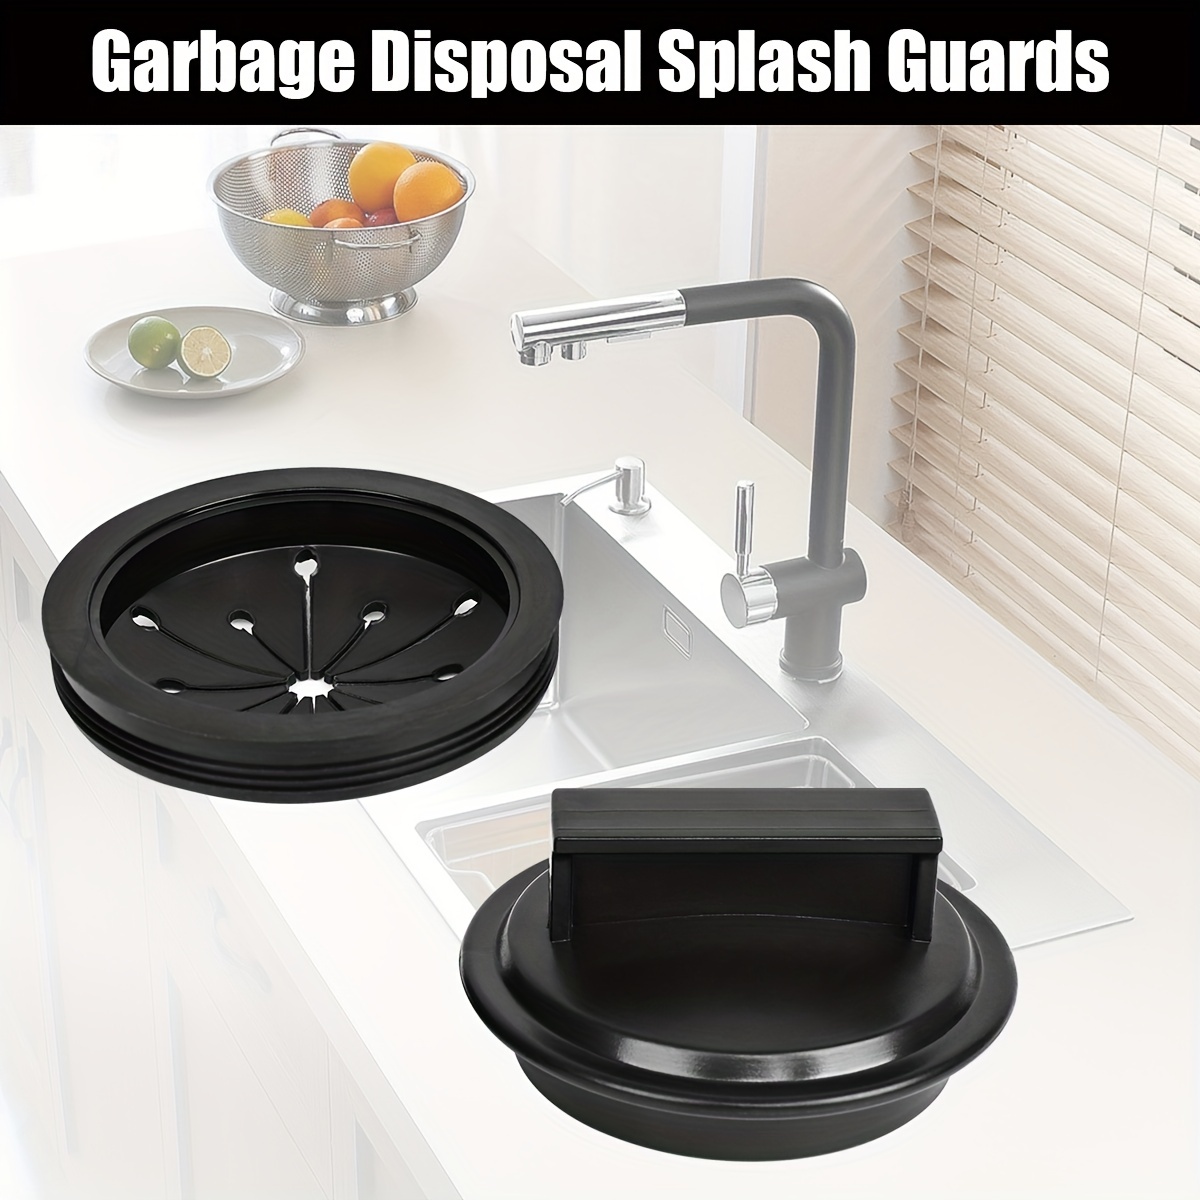 Kitchen Sink Stopper: Garbage Disposal Parts